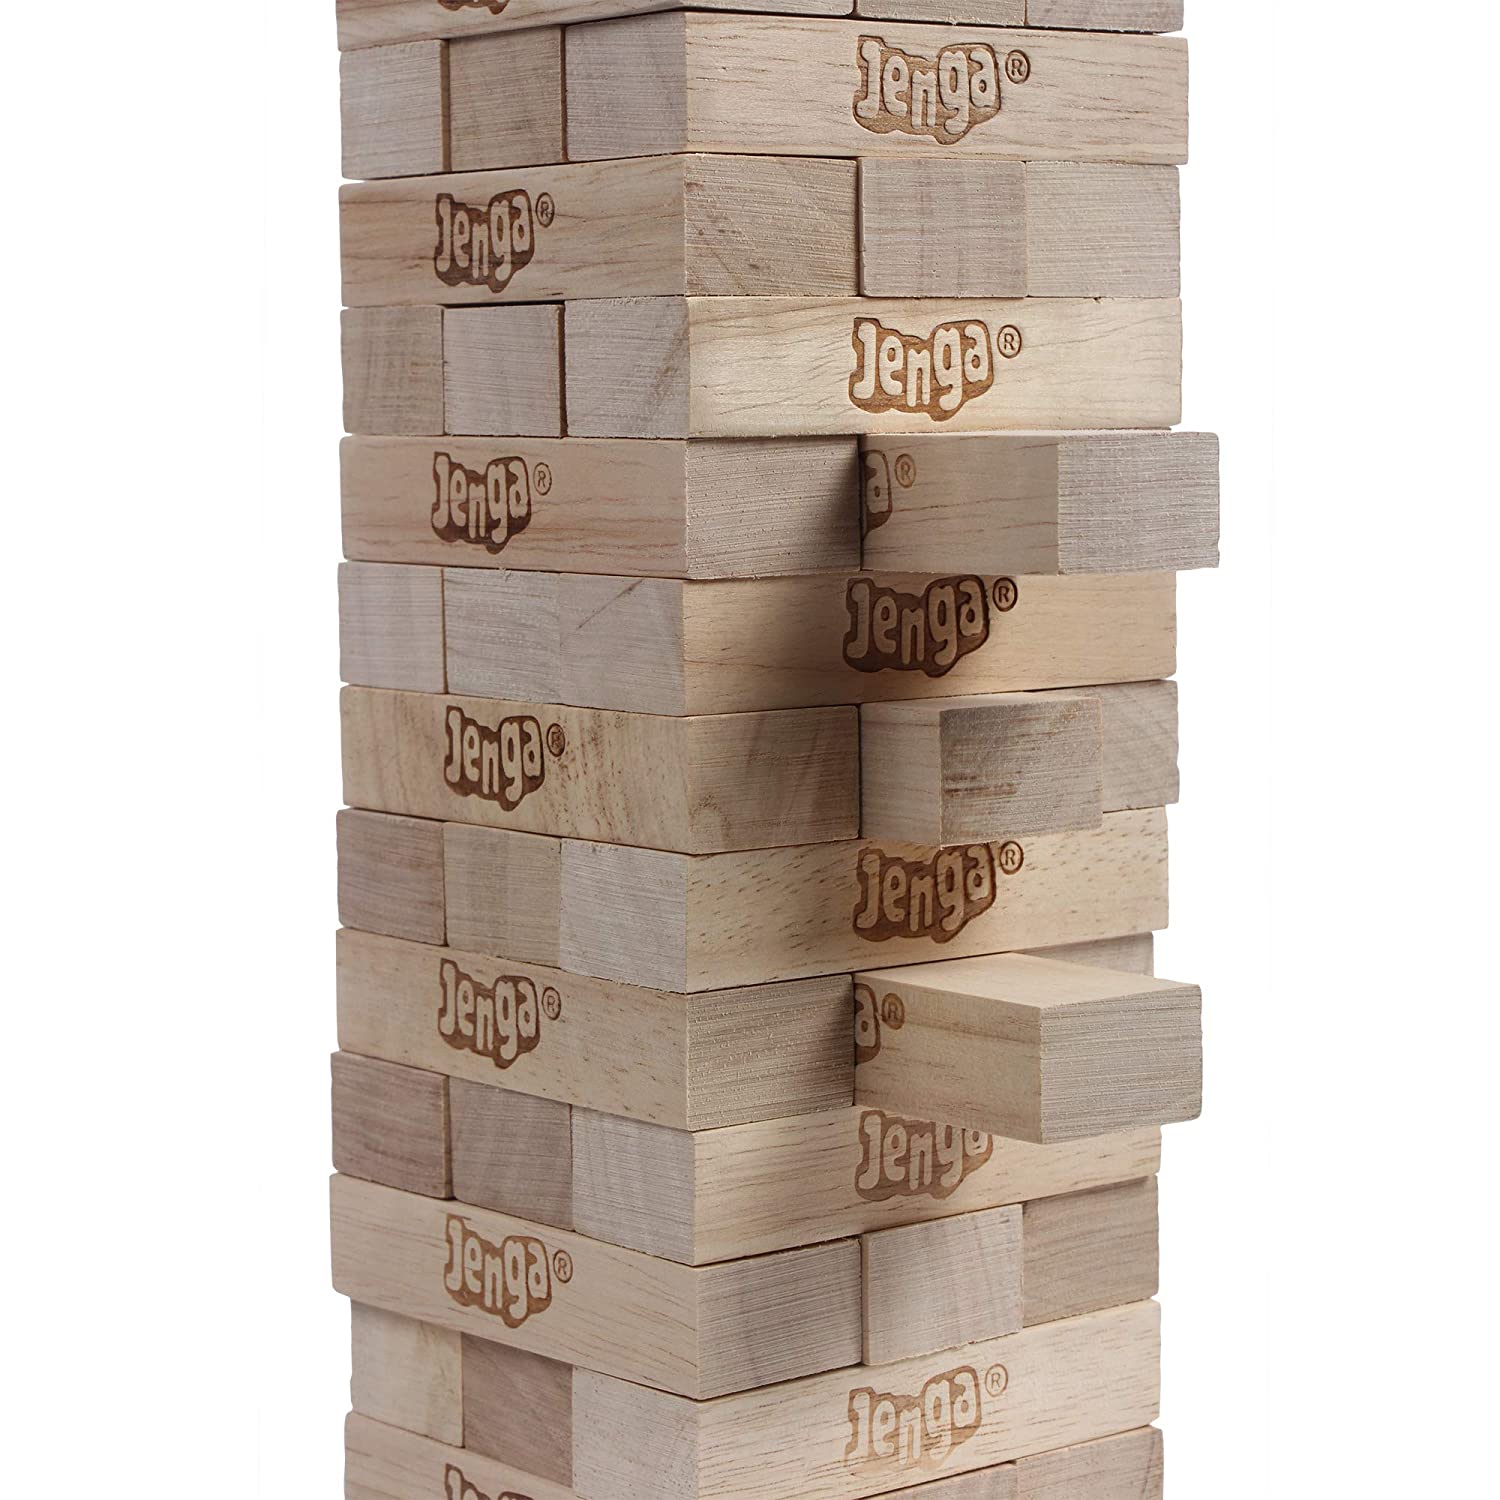 How To Play Jenga in Hindi, Wooden blocks game, Tumbling Tower